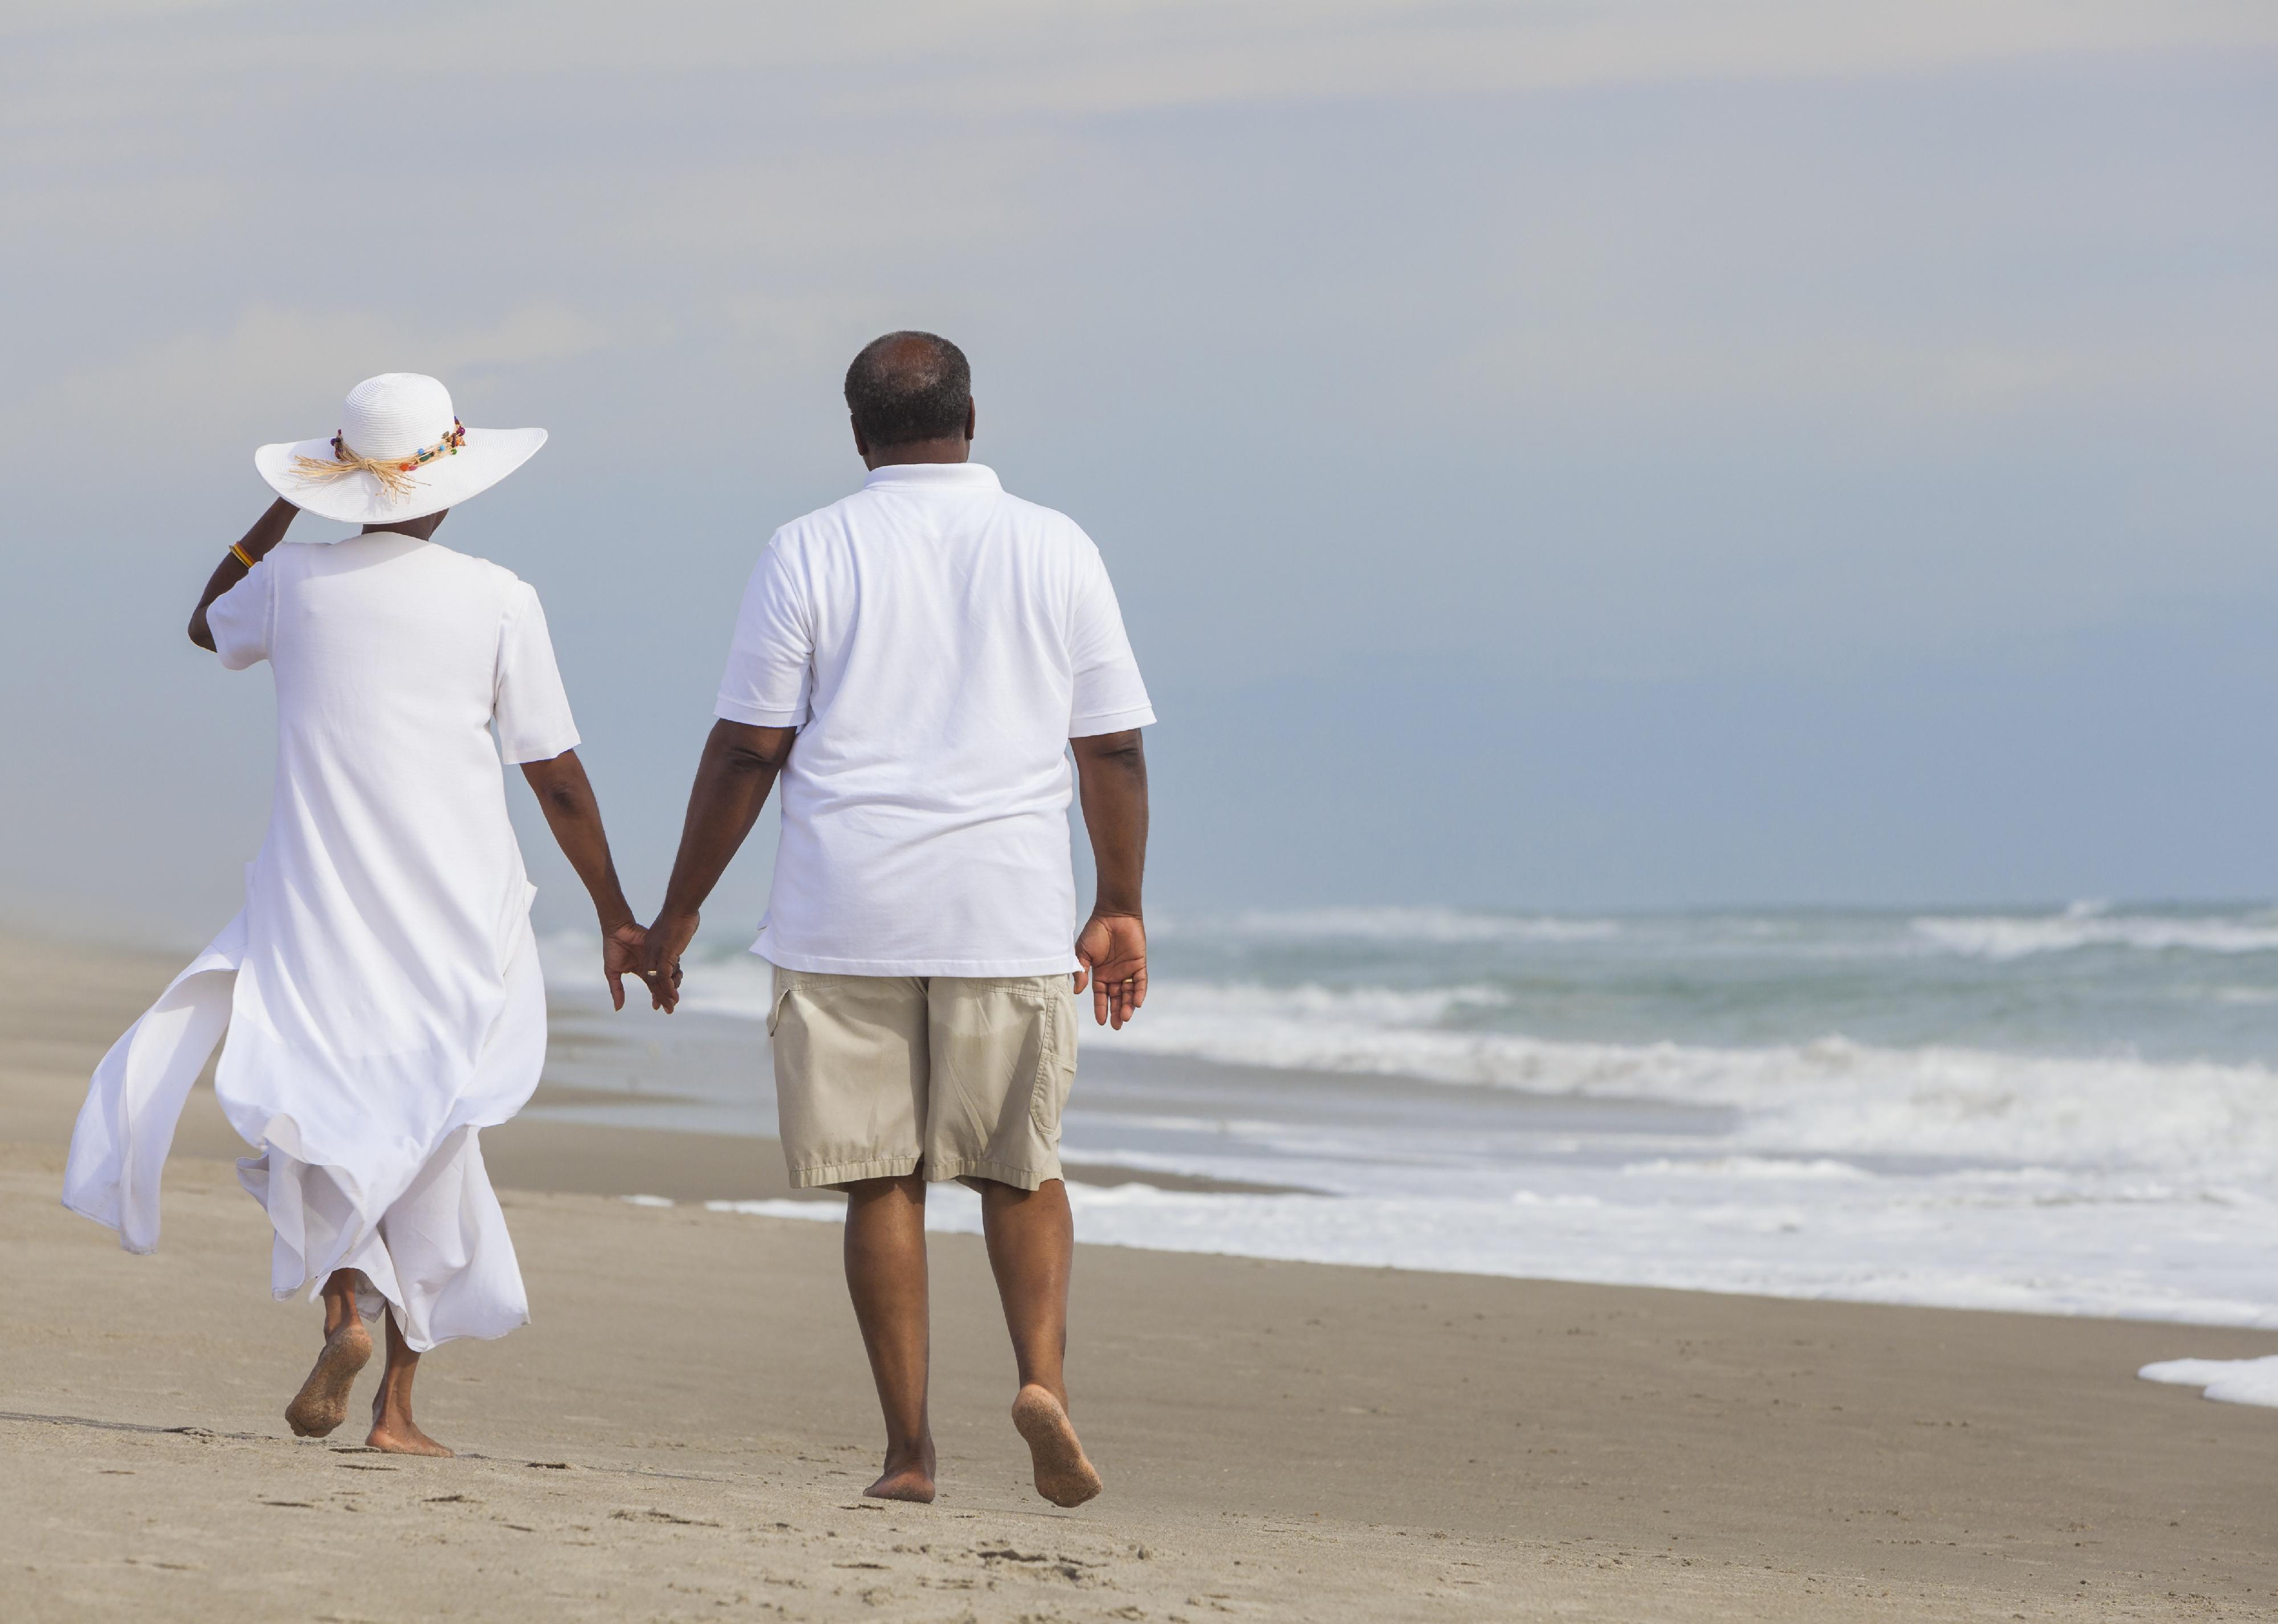 Couple walking along beach holding hands.